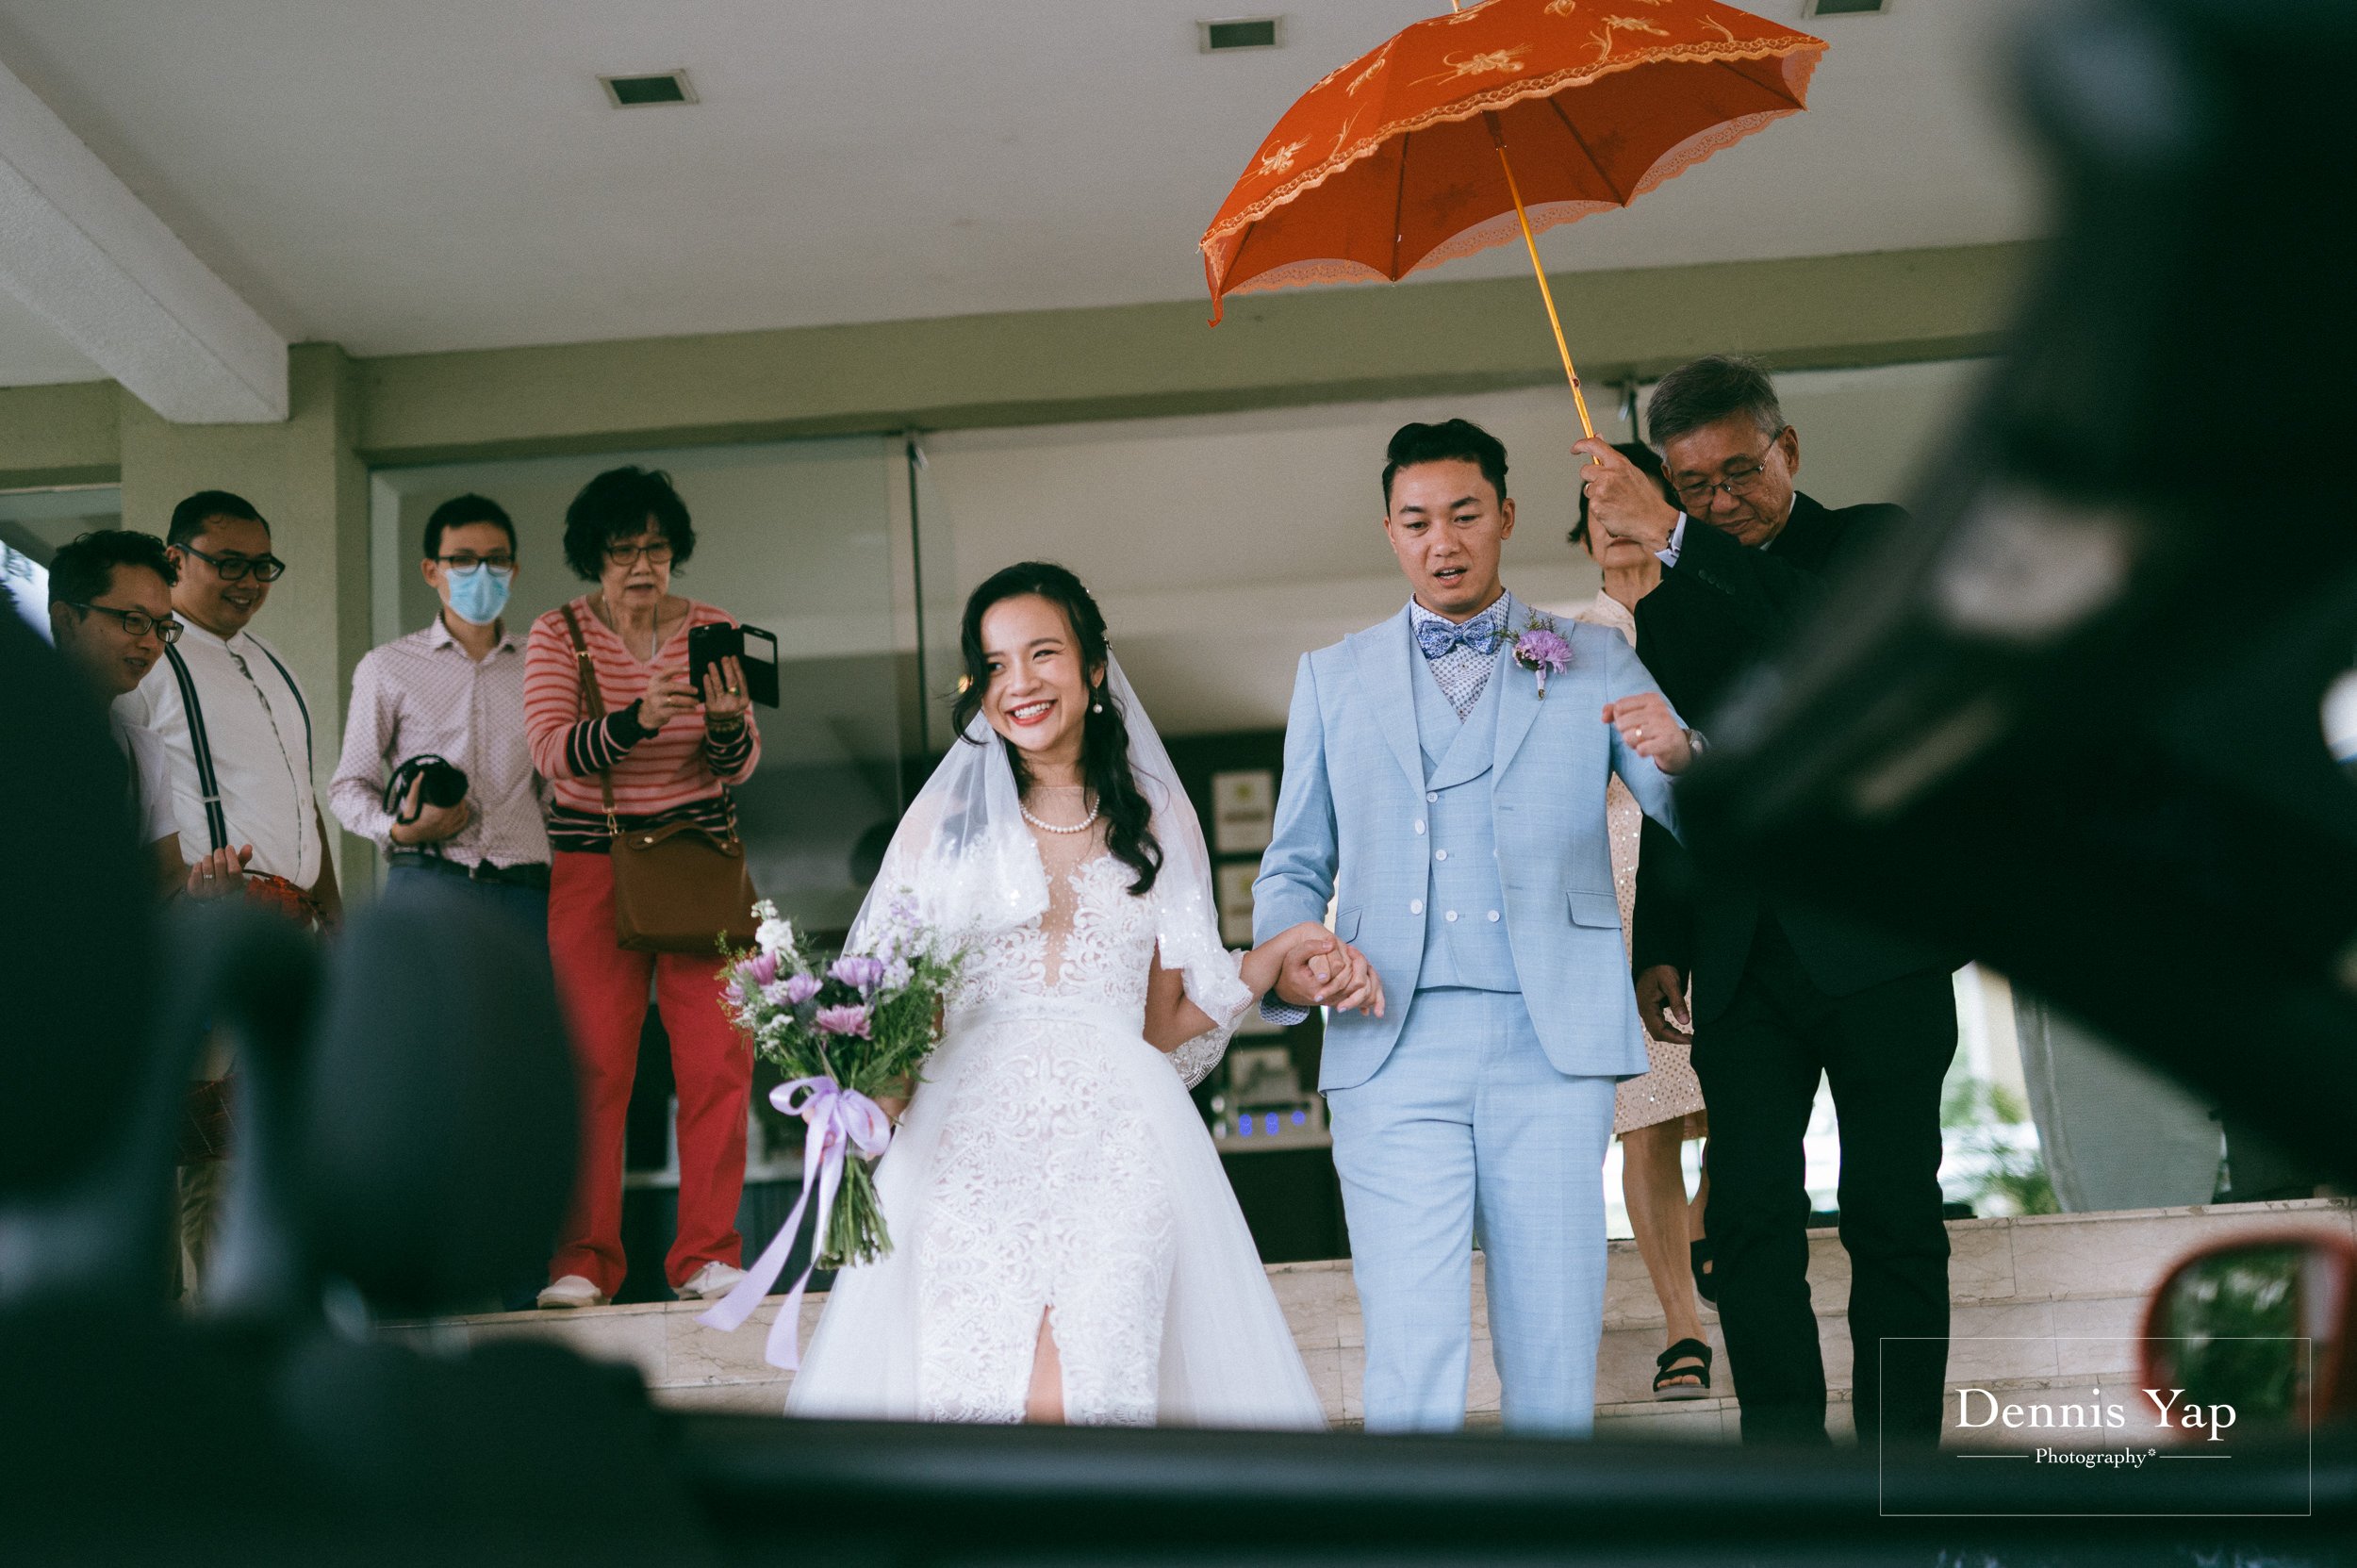 bonnie pei ni casual wedding ceremony with chill luncheon bangsar dennis yap photography-46.jpg